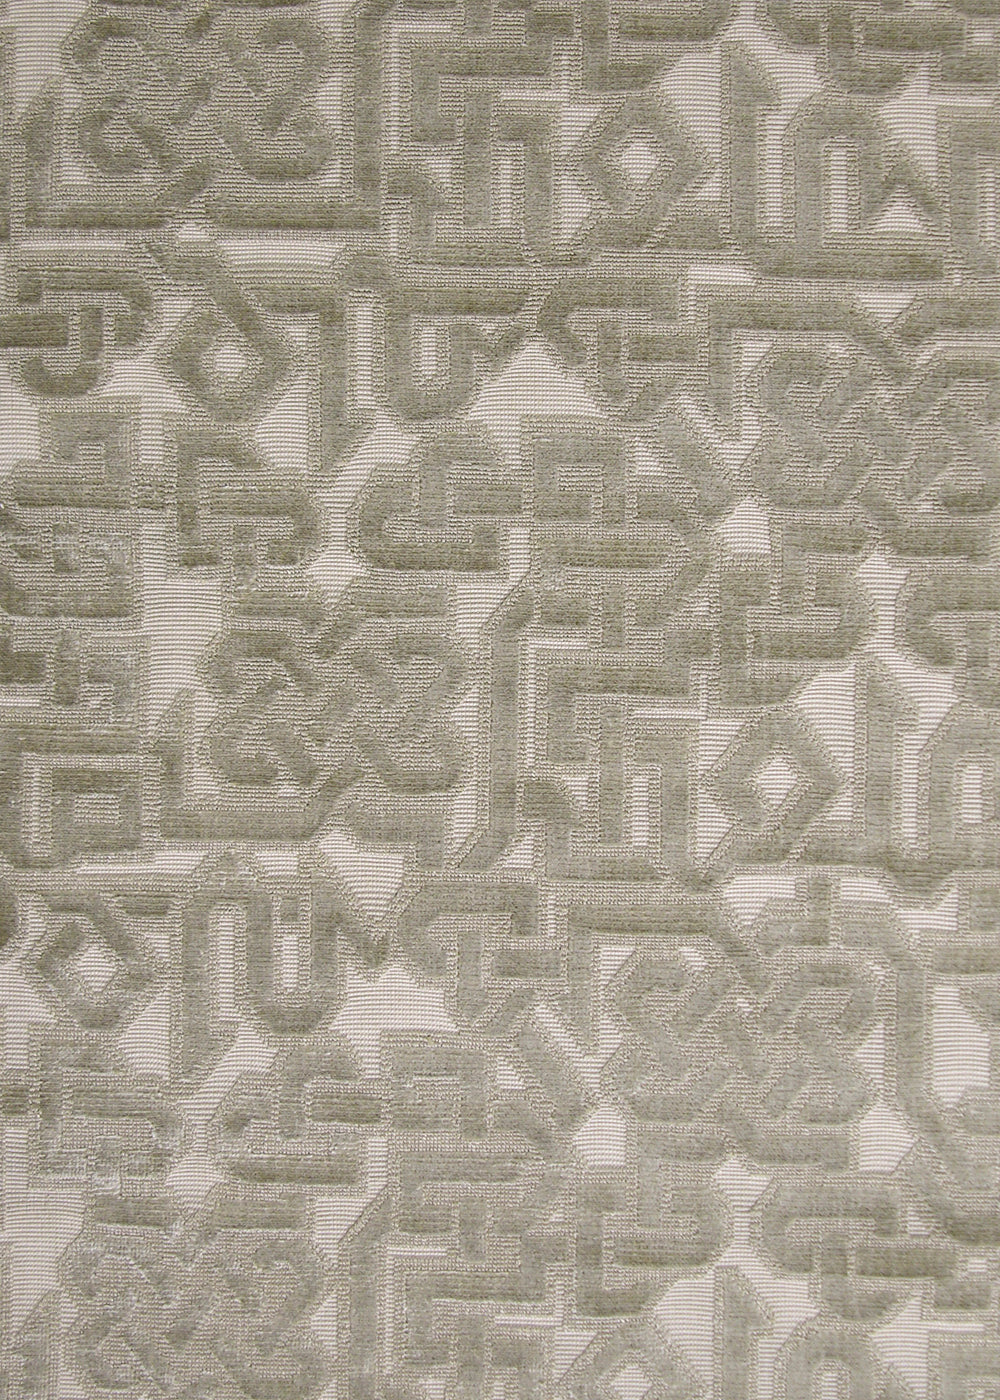 gray-green velvet fabric with a geometric lattice design